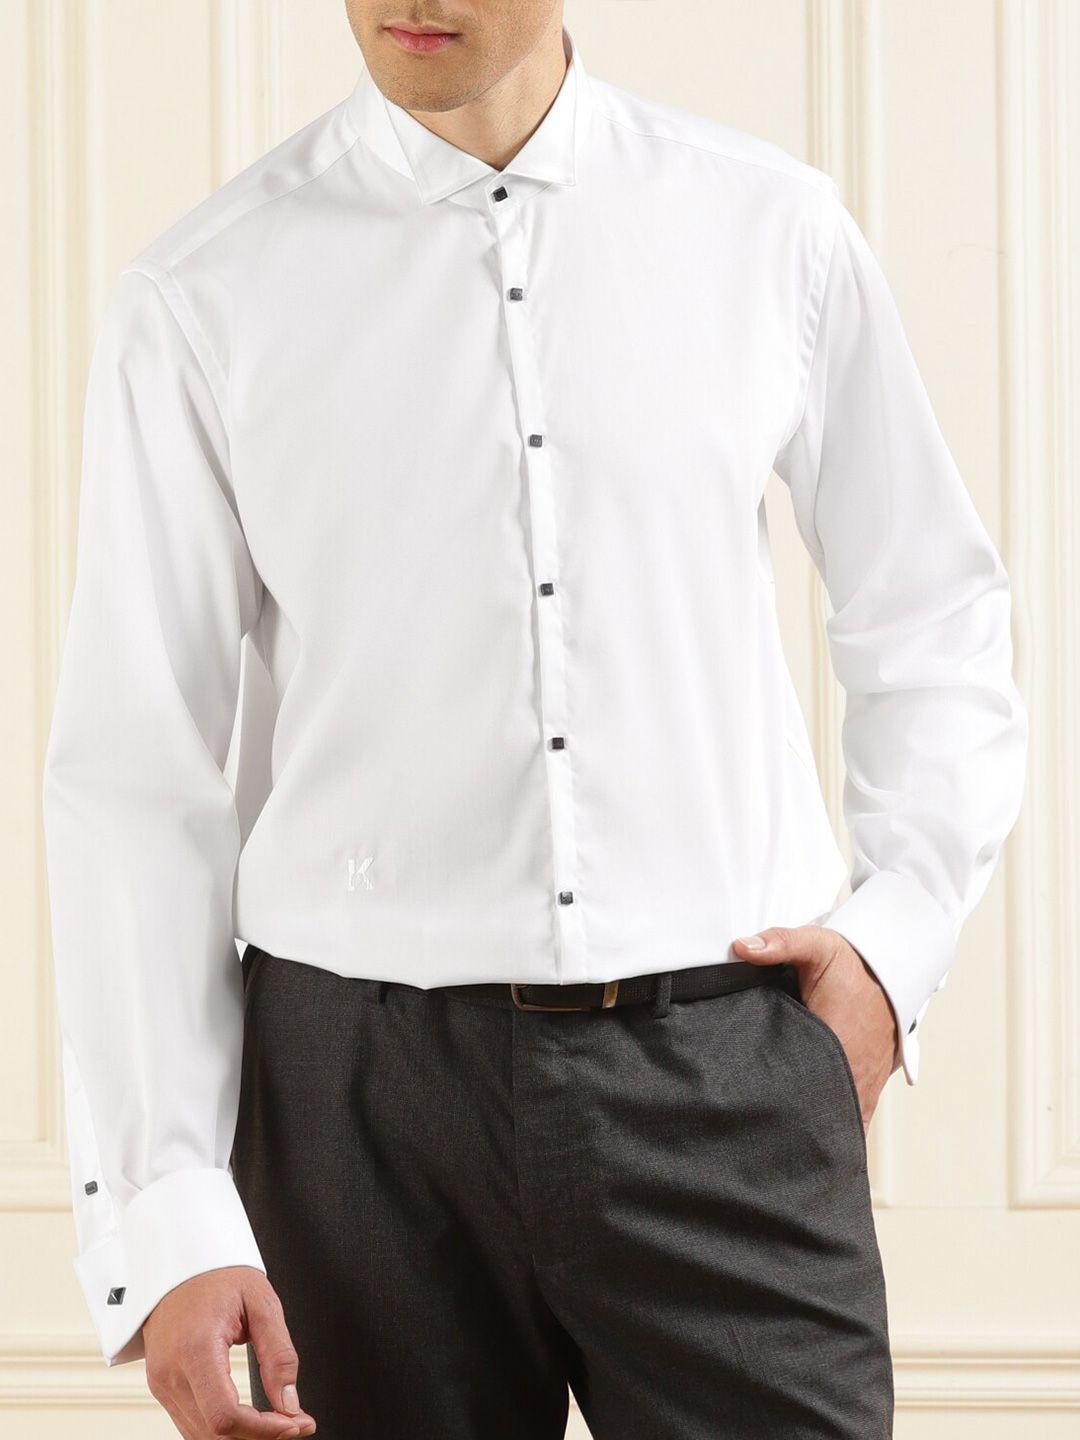 karl lagerfeld opaque formal cotton shirt